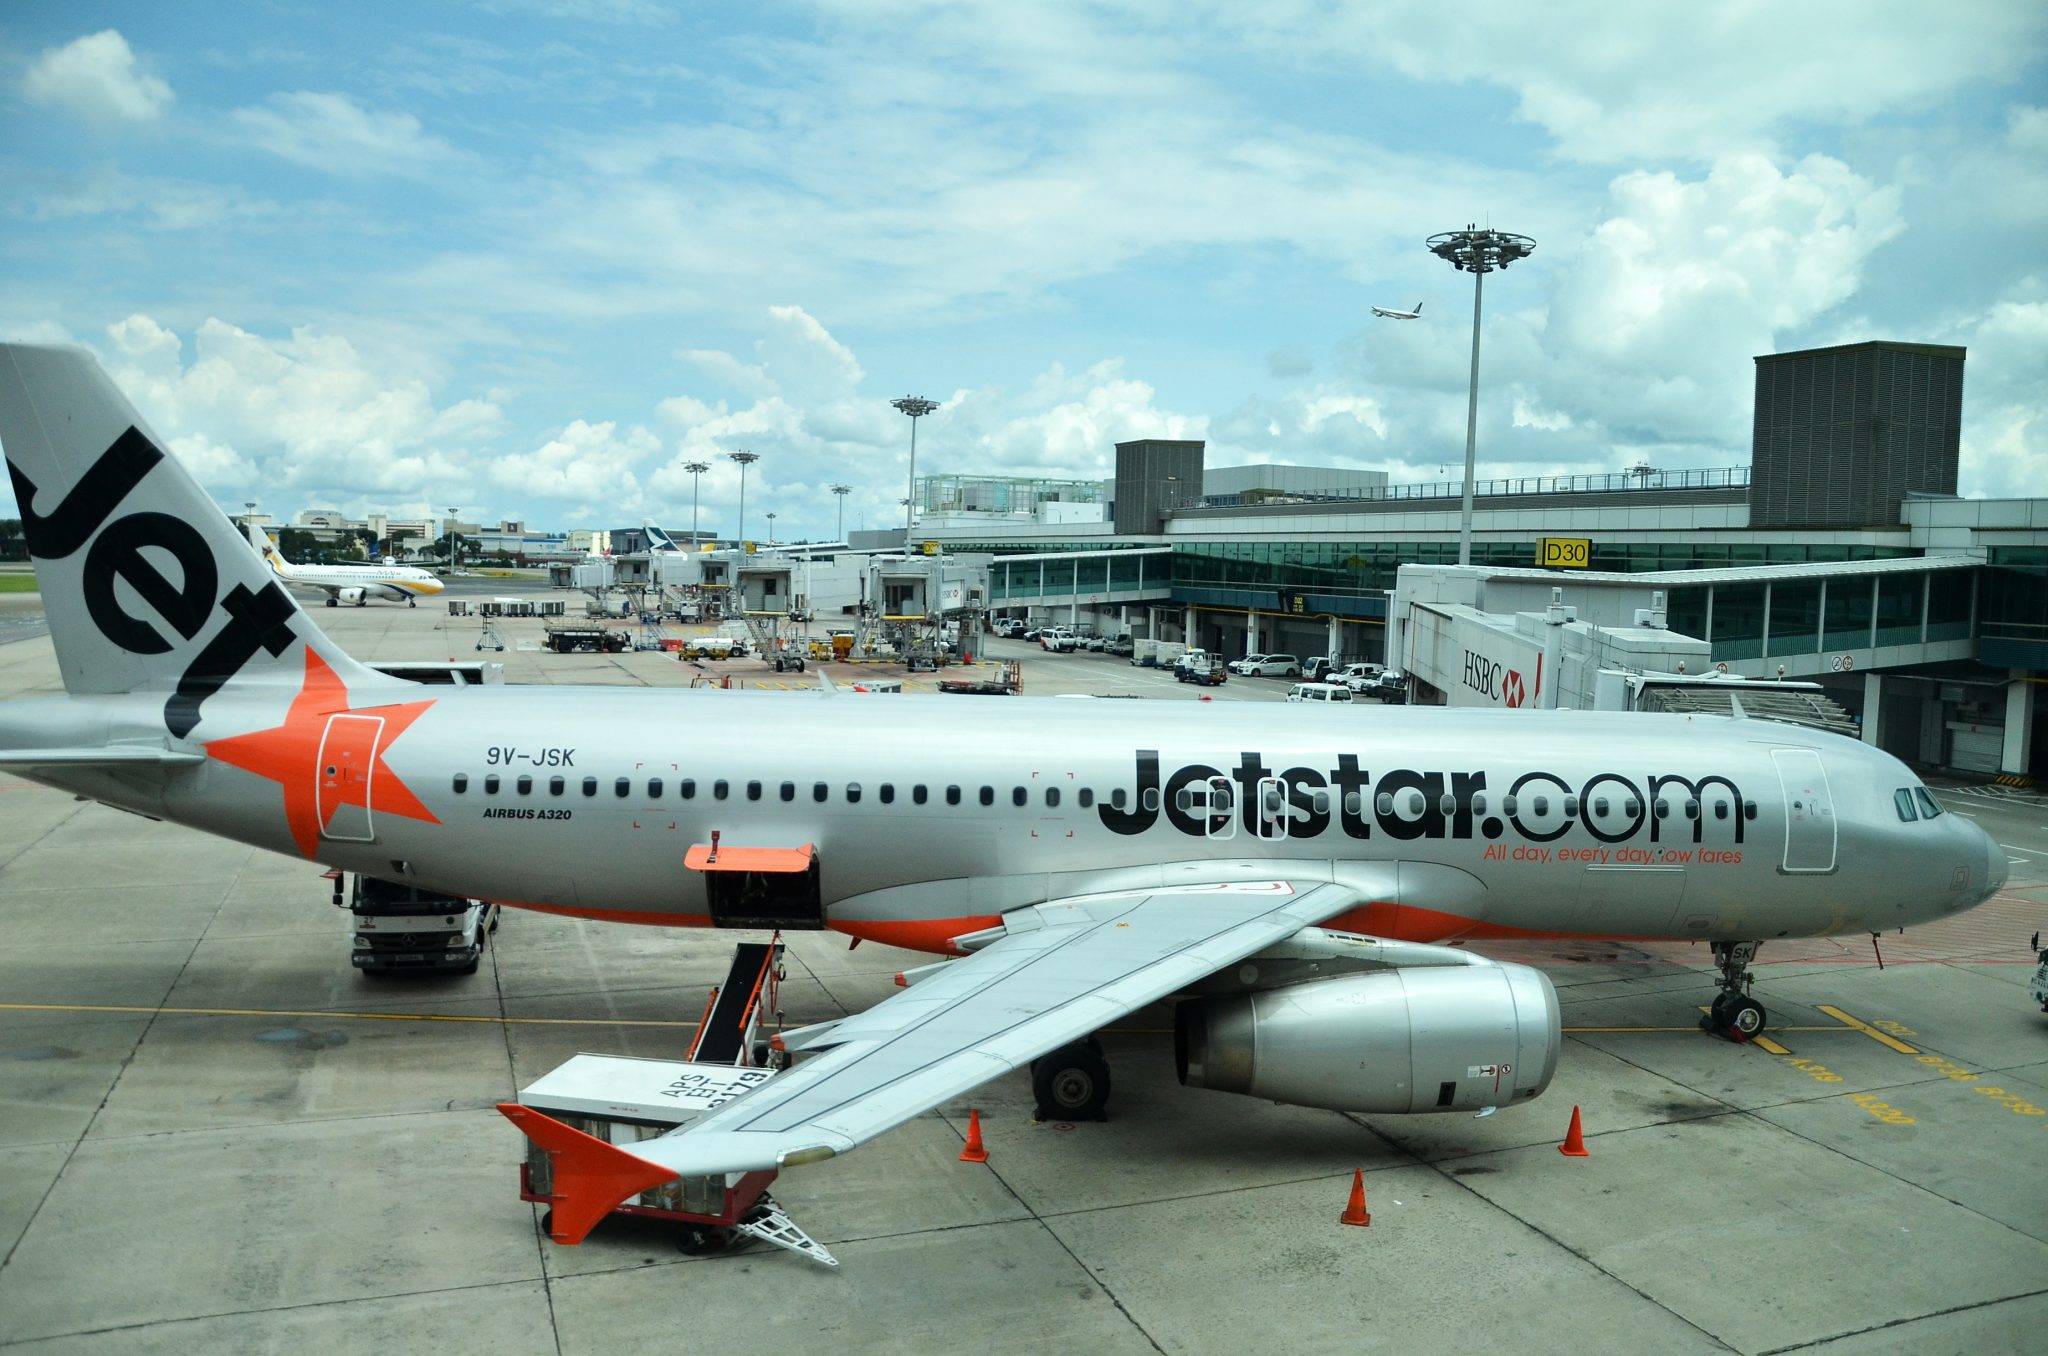 Cariverga |   почему singapore airlines – не топовая авиакомпания?